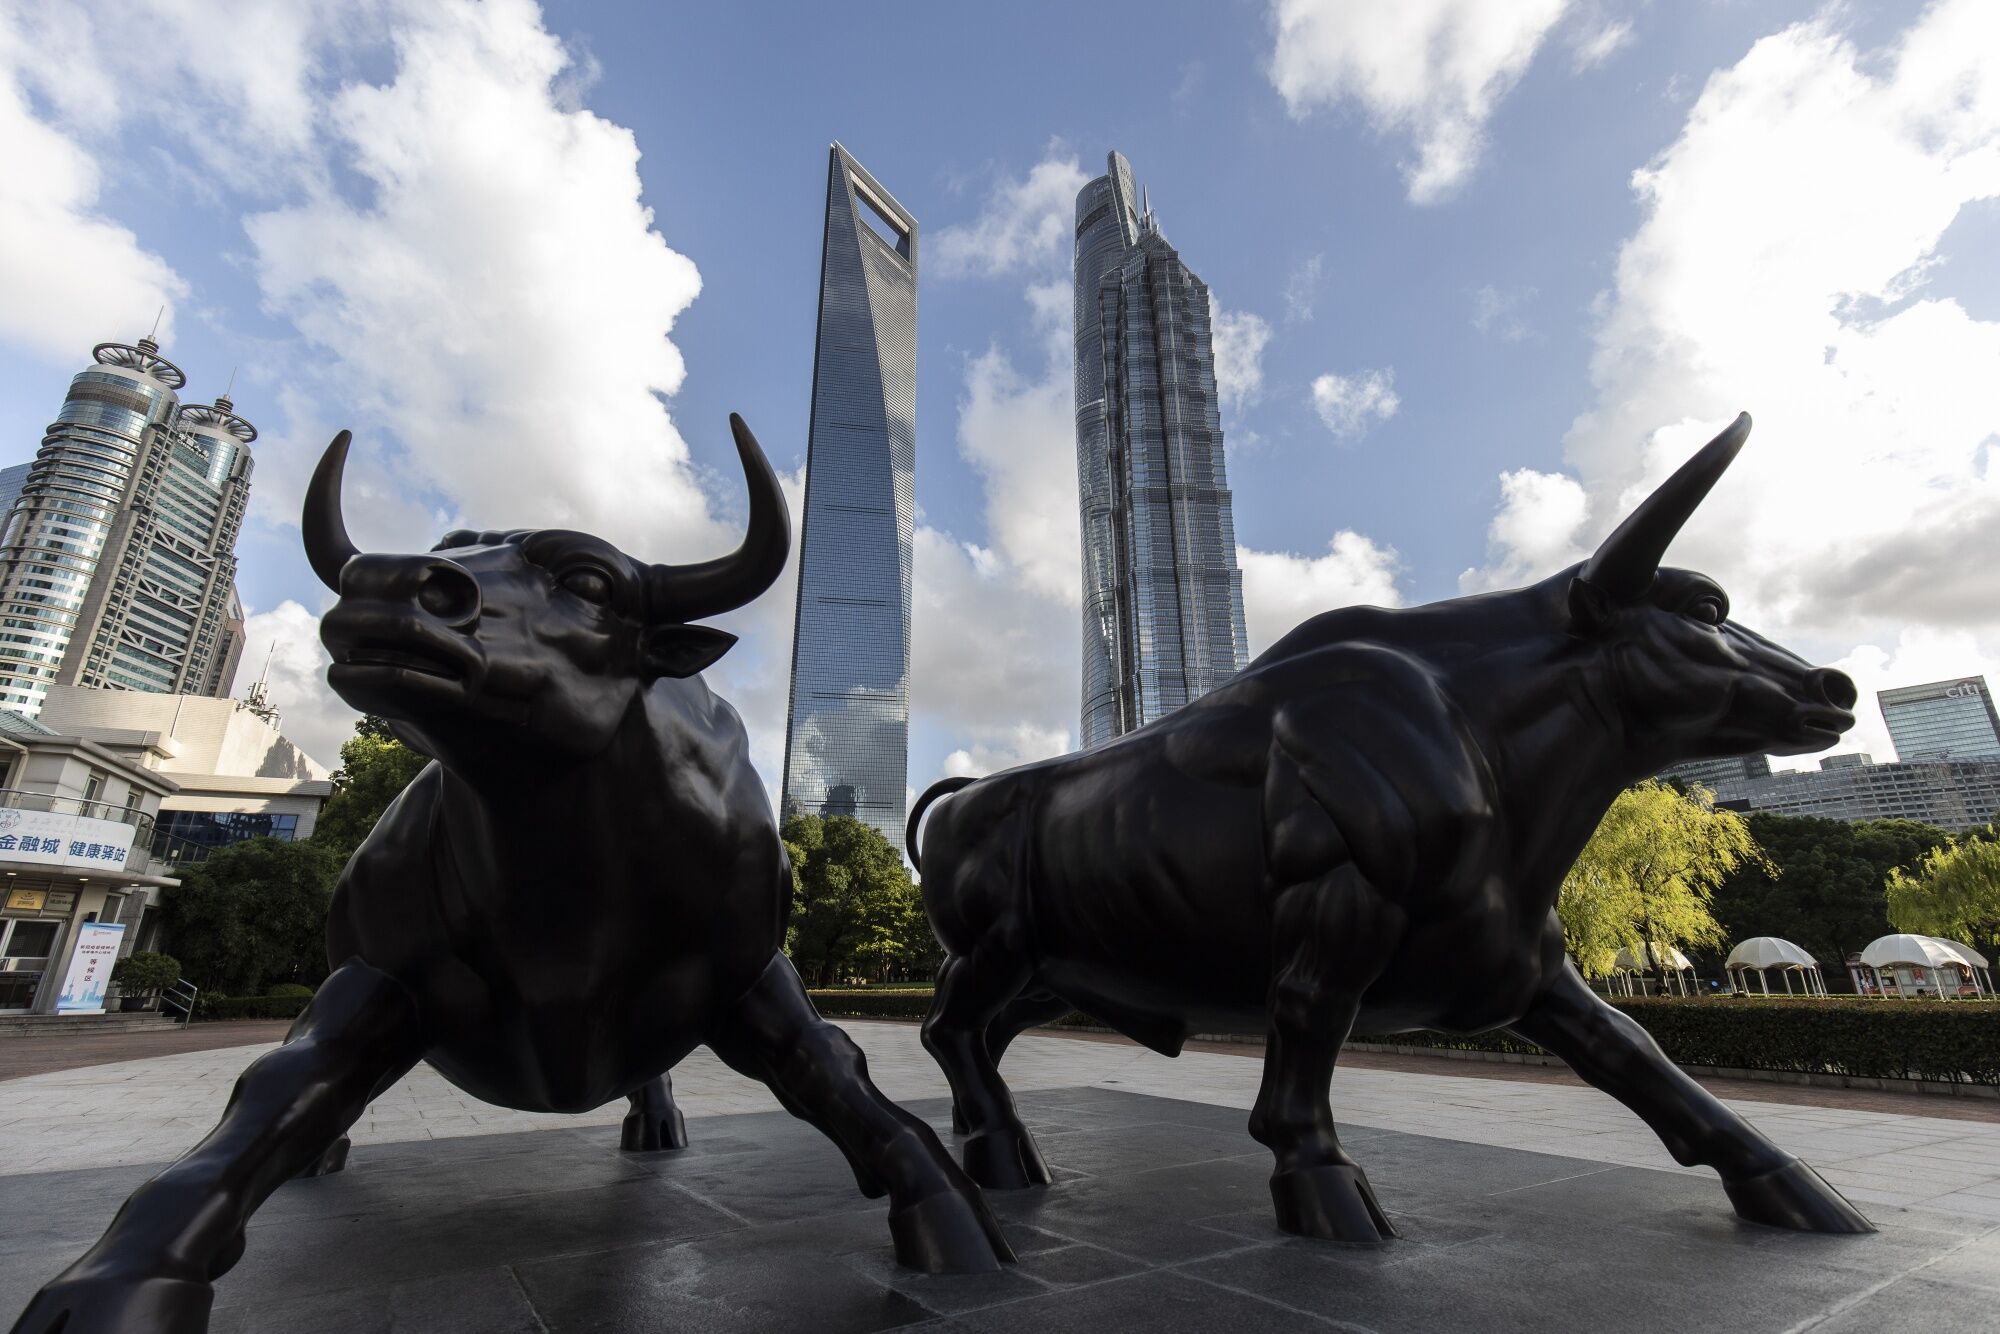 The бык черемушки. Статуя быка меди фондовой биржи Шэньчжэня. Шанхайский бык статуя. The бык Профсоюзная. The бык Арбат.